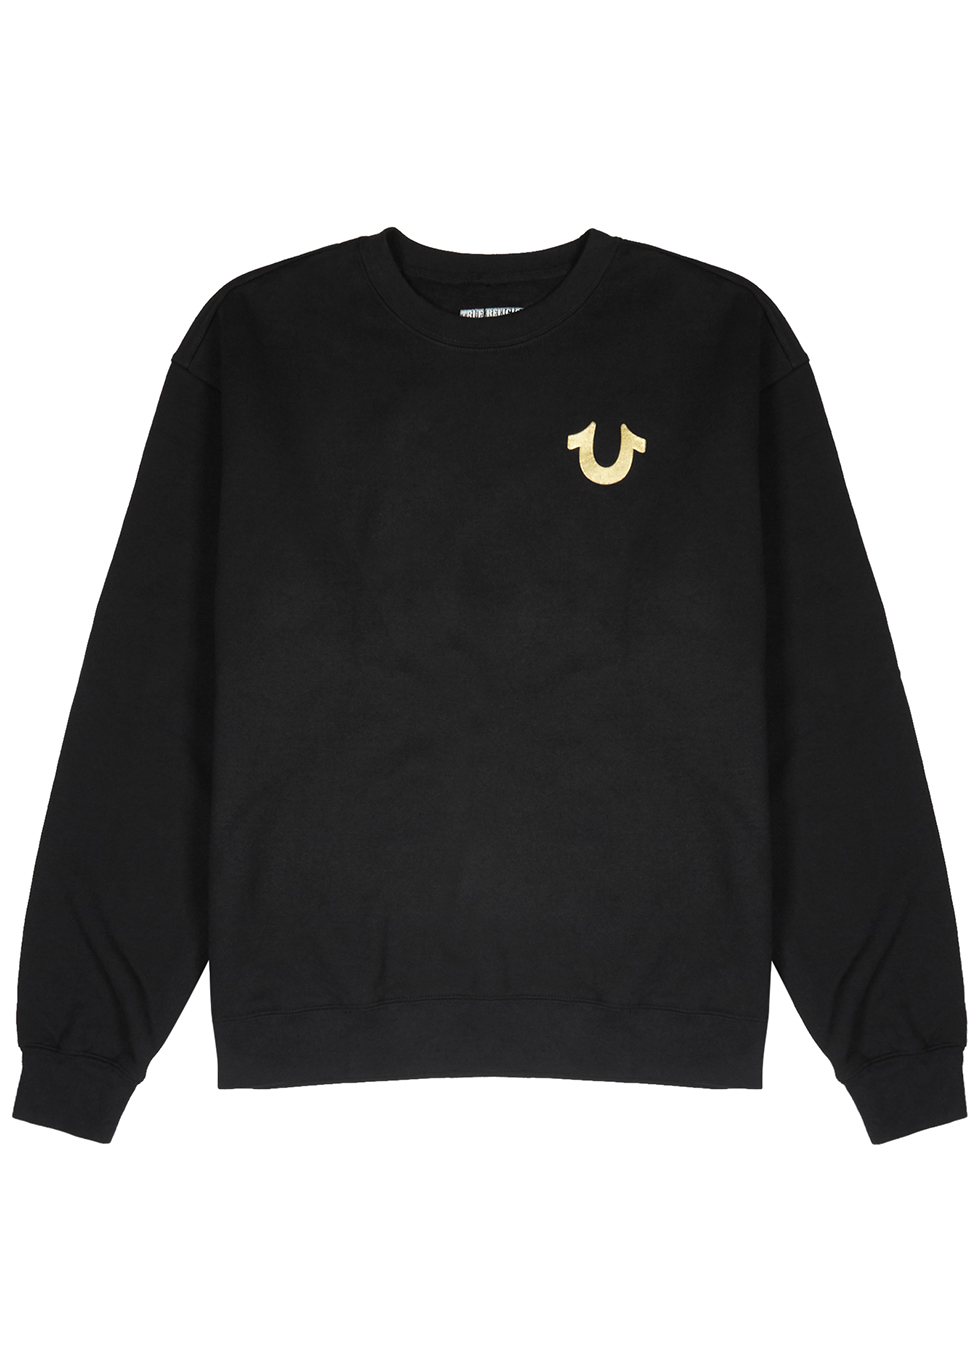 true religion black sweater